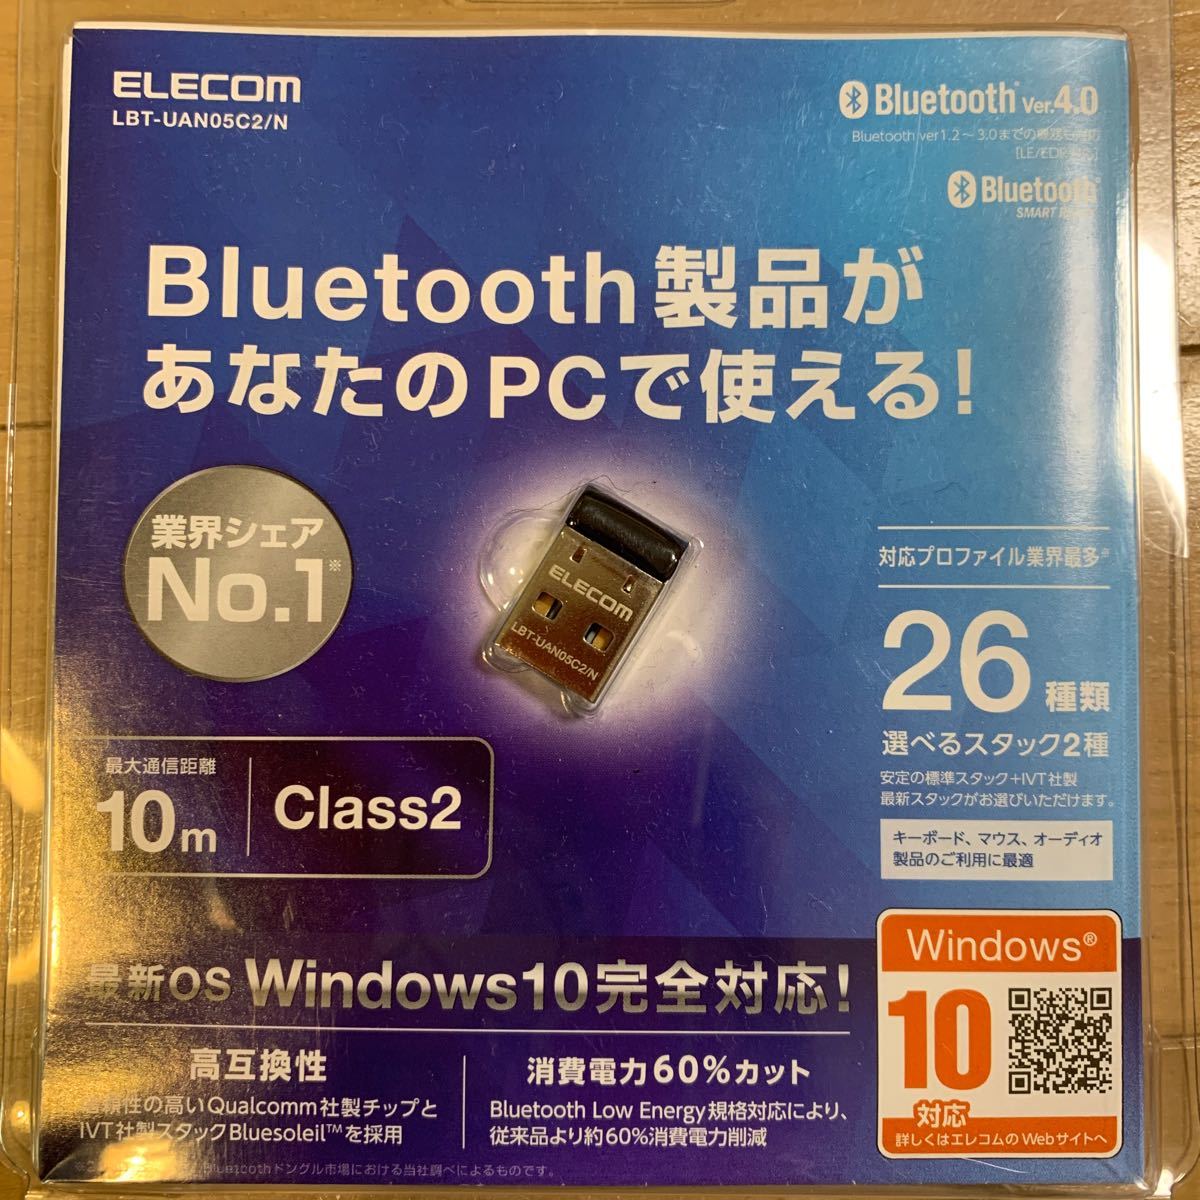 Bluetooth USBアダプタ LBT-UAN05C2 エレコム ELECOM Windows10  ブルートゥース